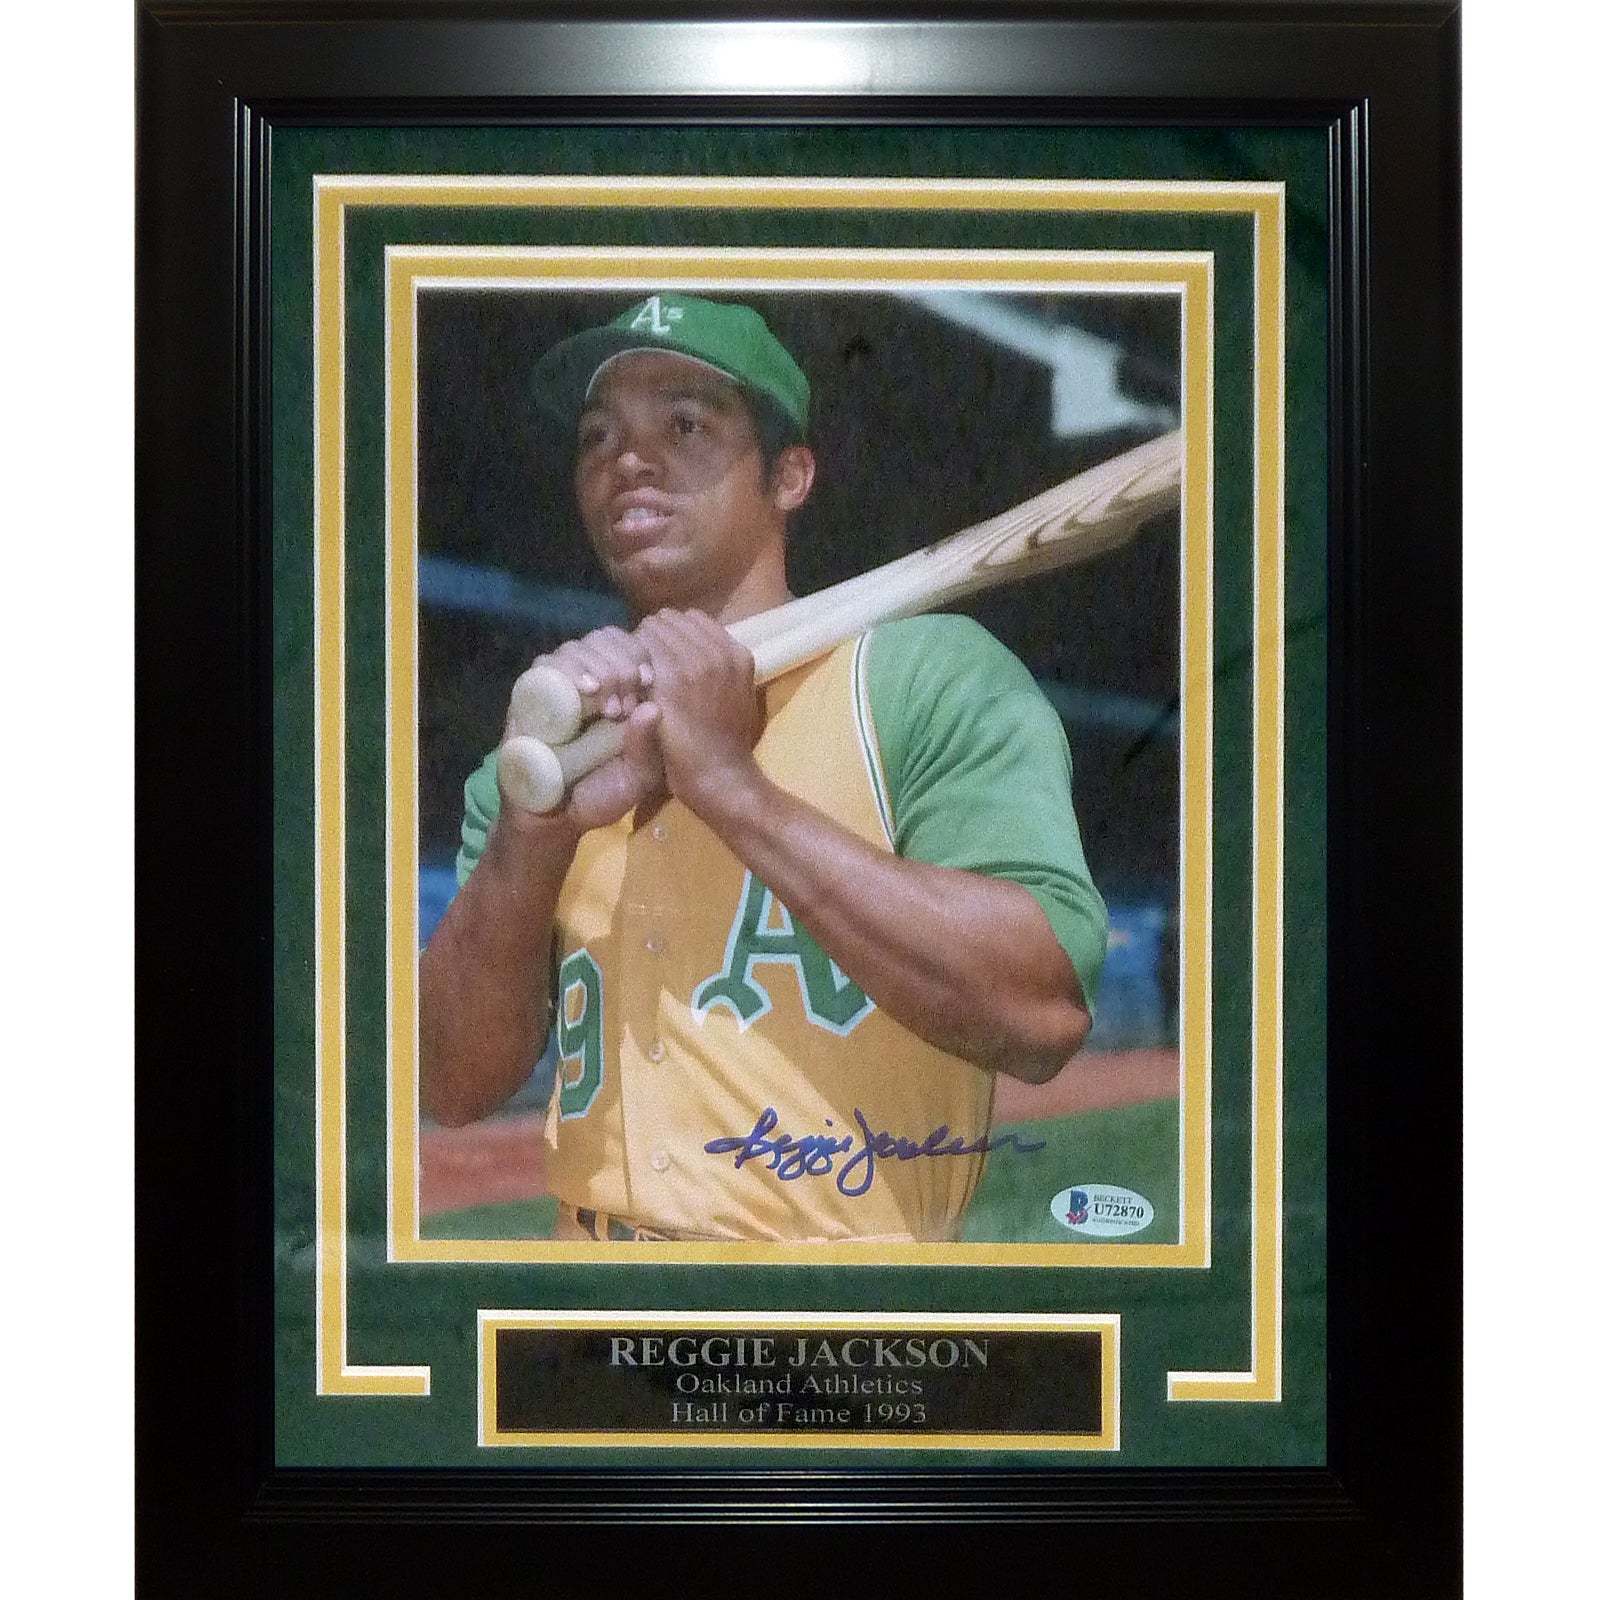 Reggie Jackson Autographed Oakland Athletics Deluxe Framed 8x10 Photo –  Palm Beach Autographs LLC